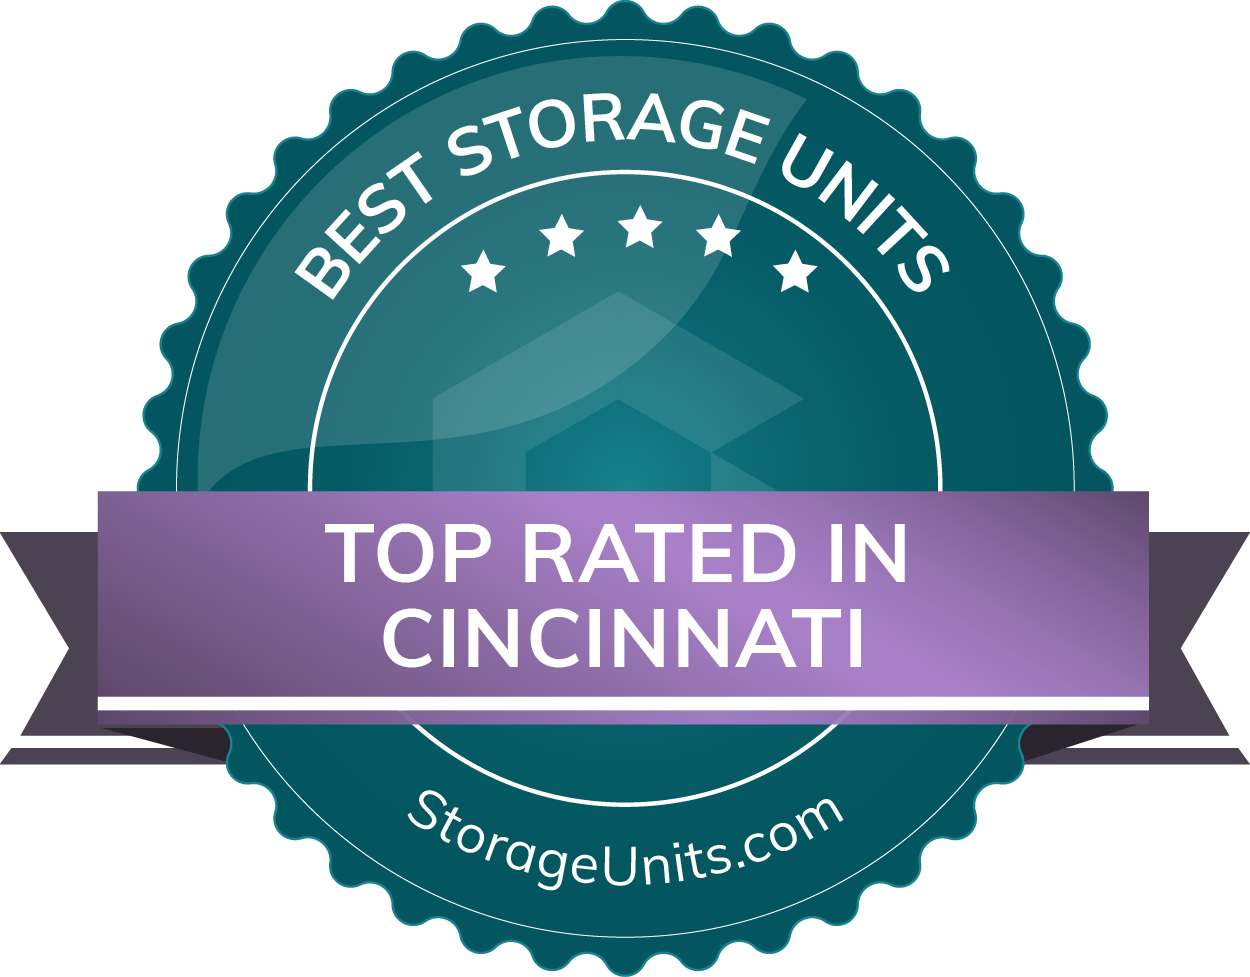 Best Self Storage Units in Cincinnati, Ohio of 2022